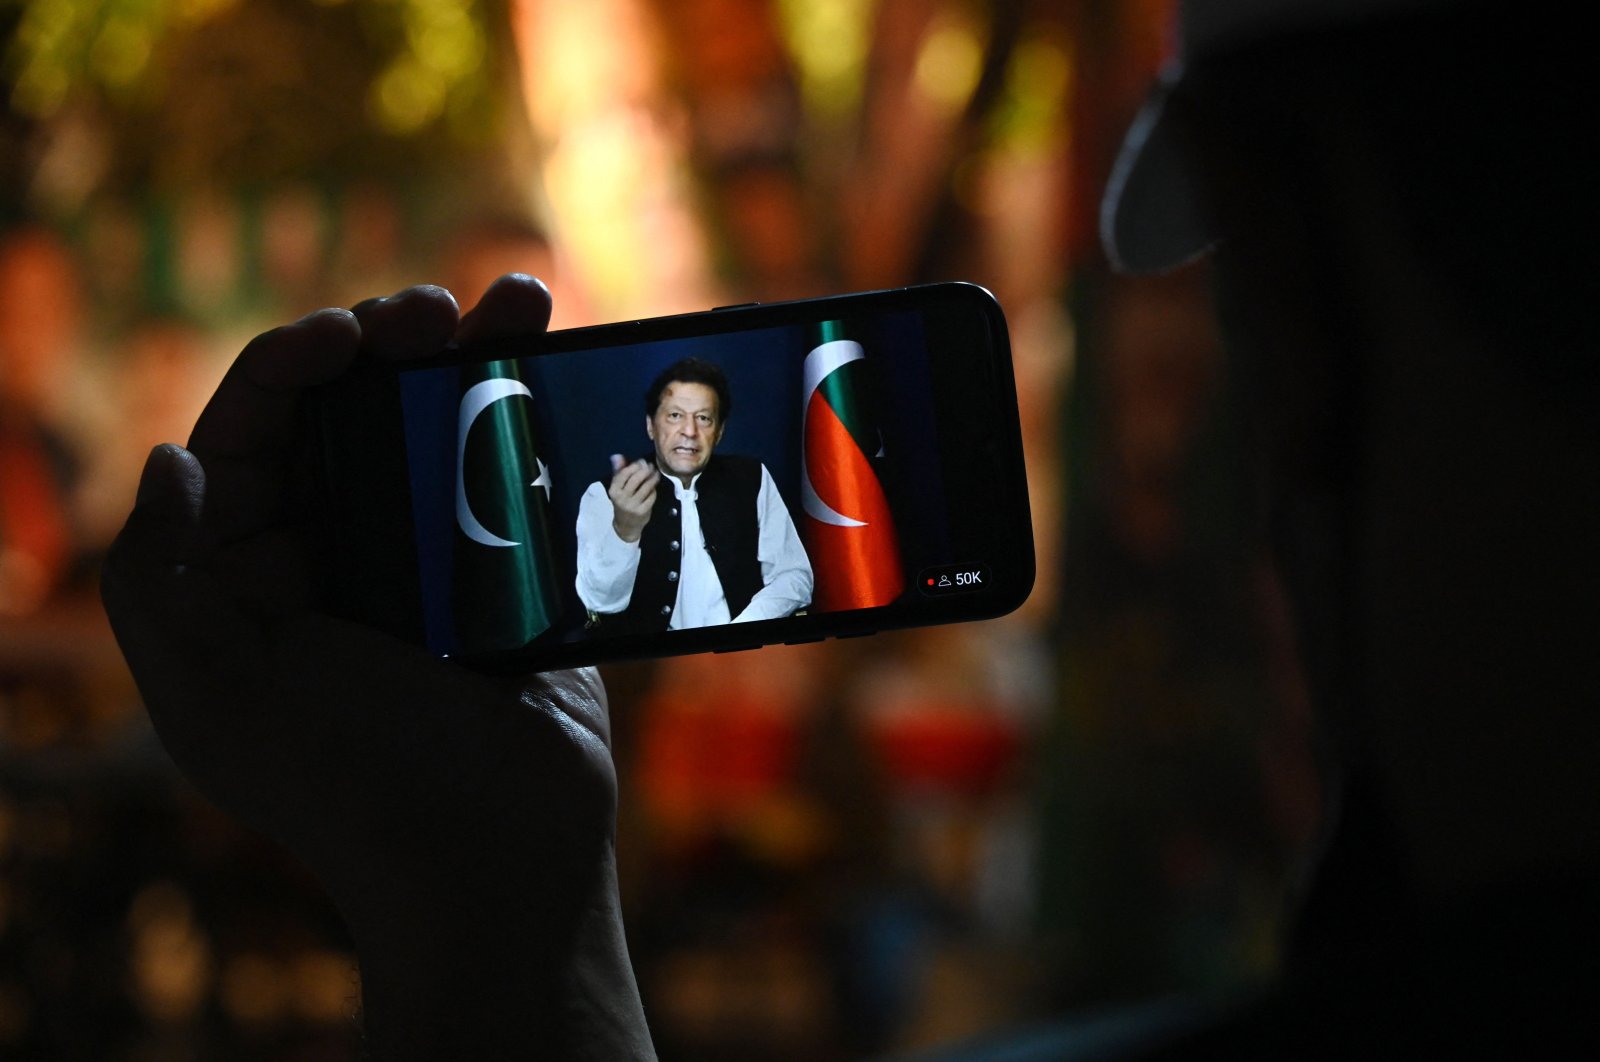 Mantan Perdana Menteri Pakistan Imran Khan berunjuk rasa untuk protes nasional